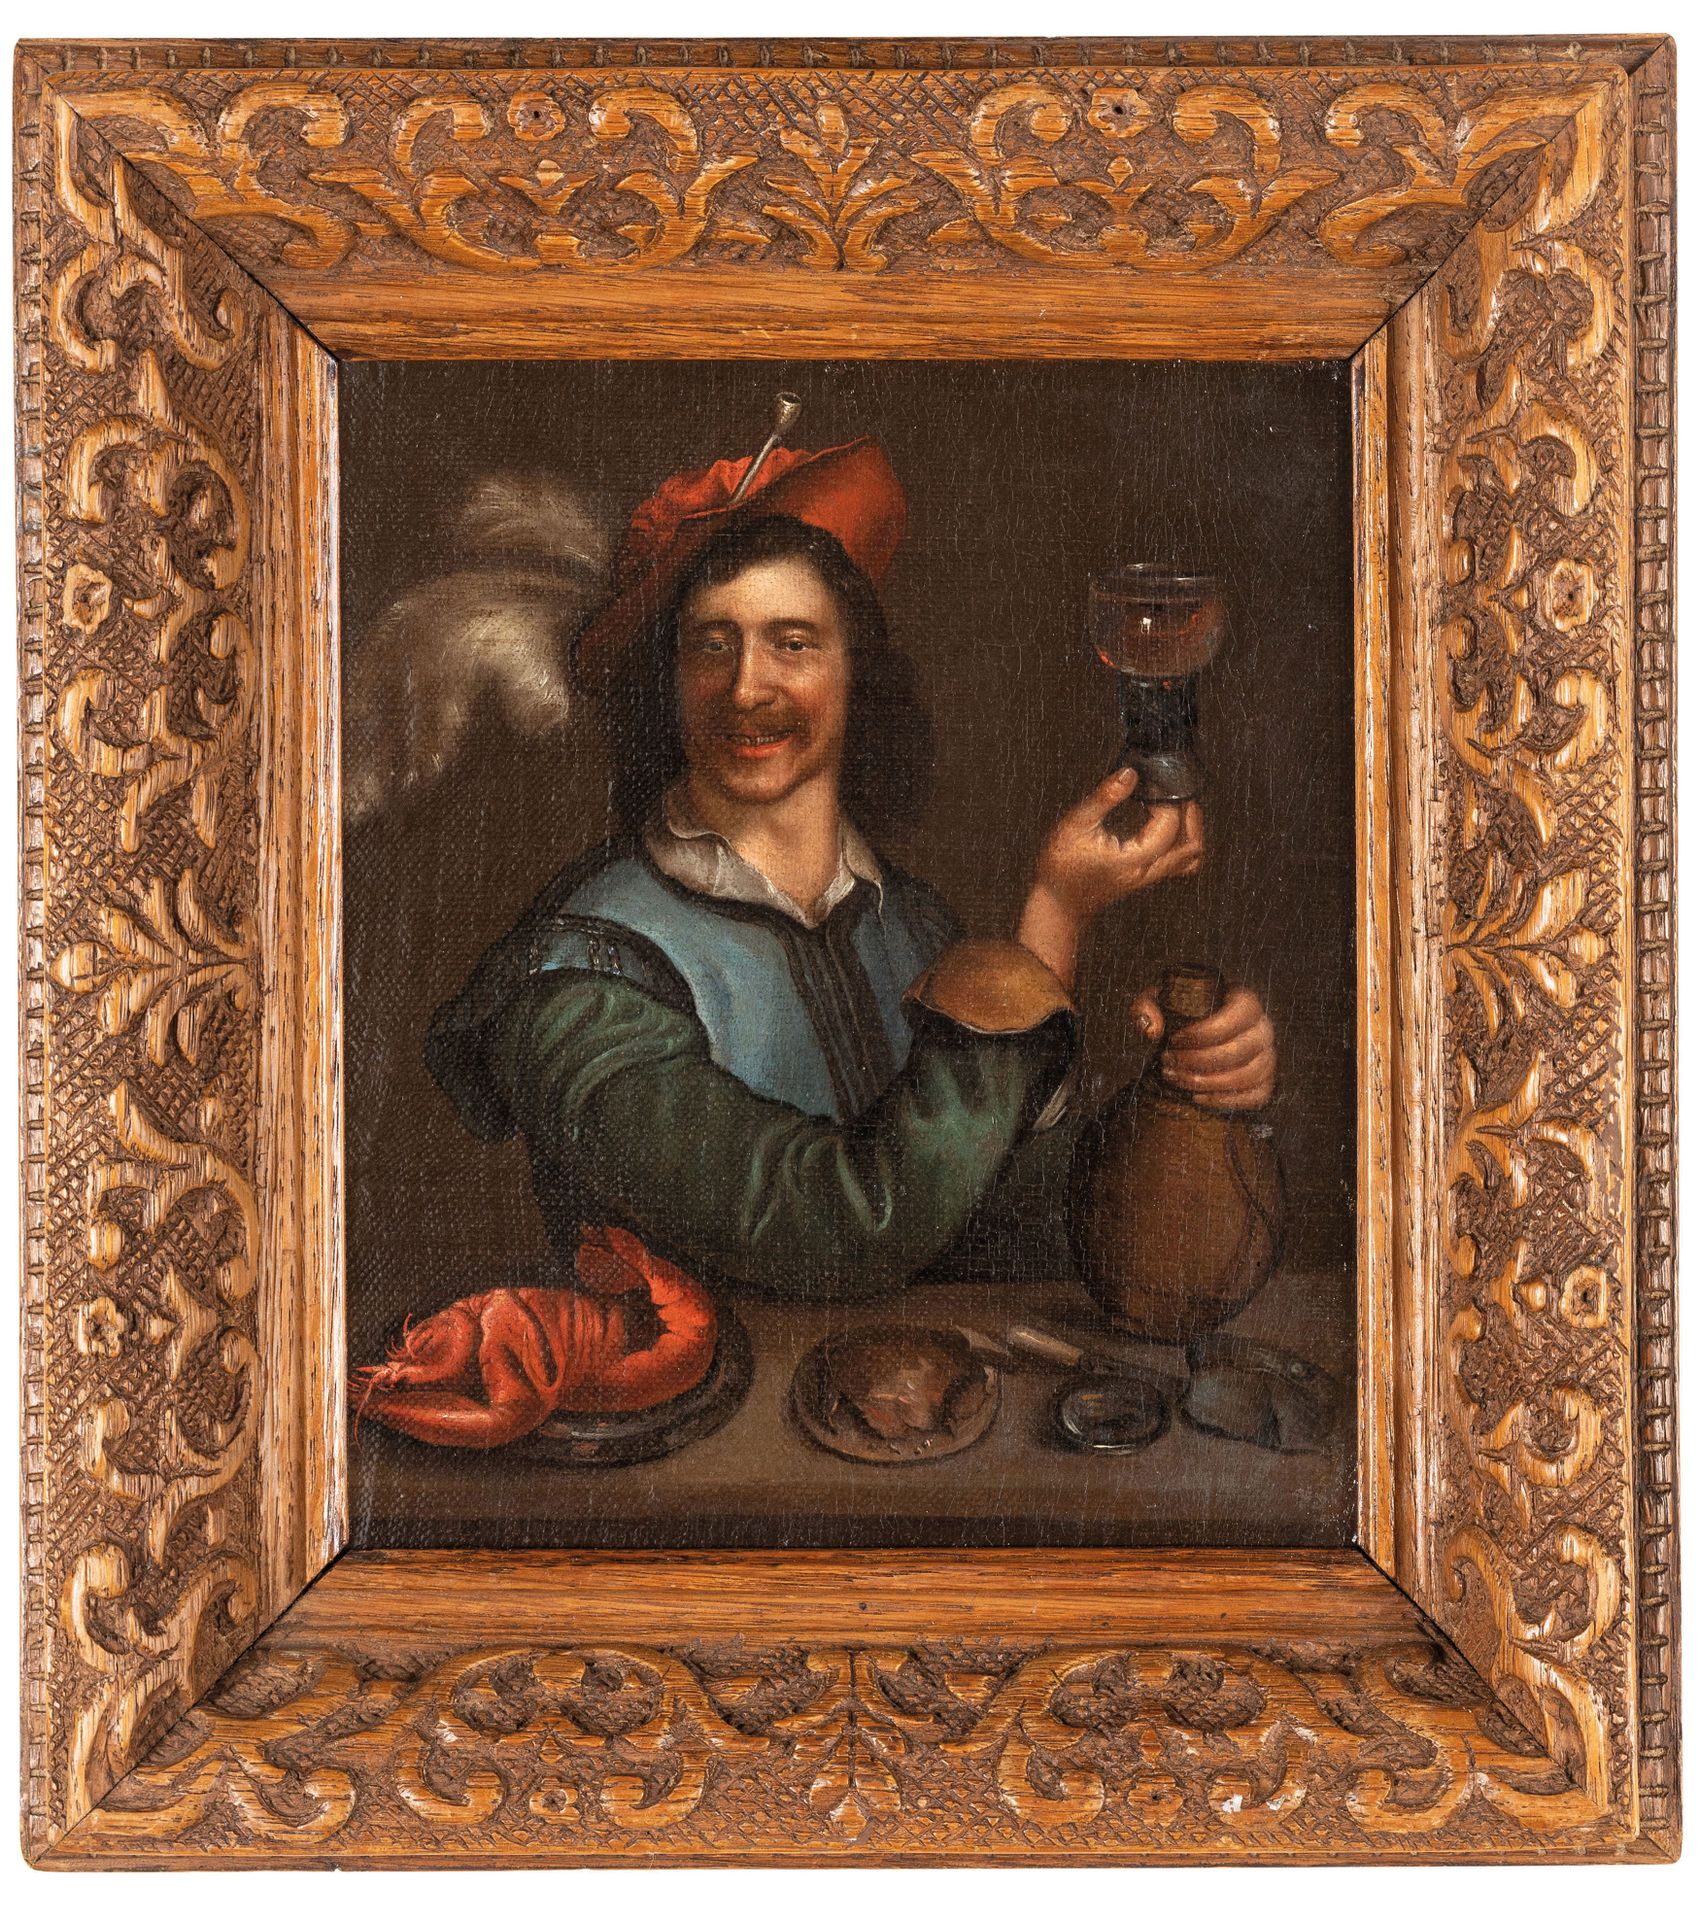 JAN VAN HELMONT (cerchia di) (Amberes, 1650 - 1714 /1734)
Bebedor
Óleo sobre lie&hellip;